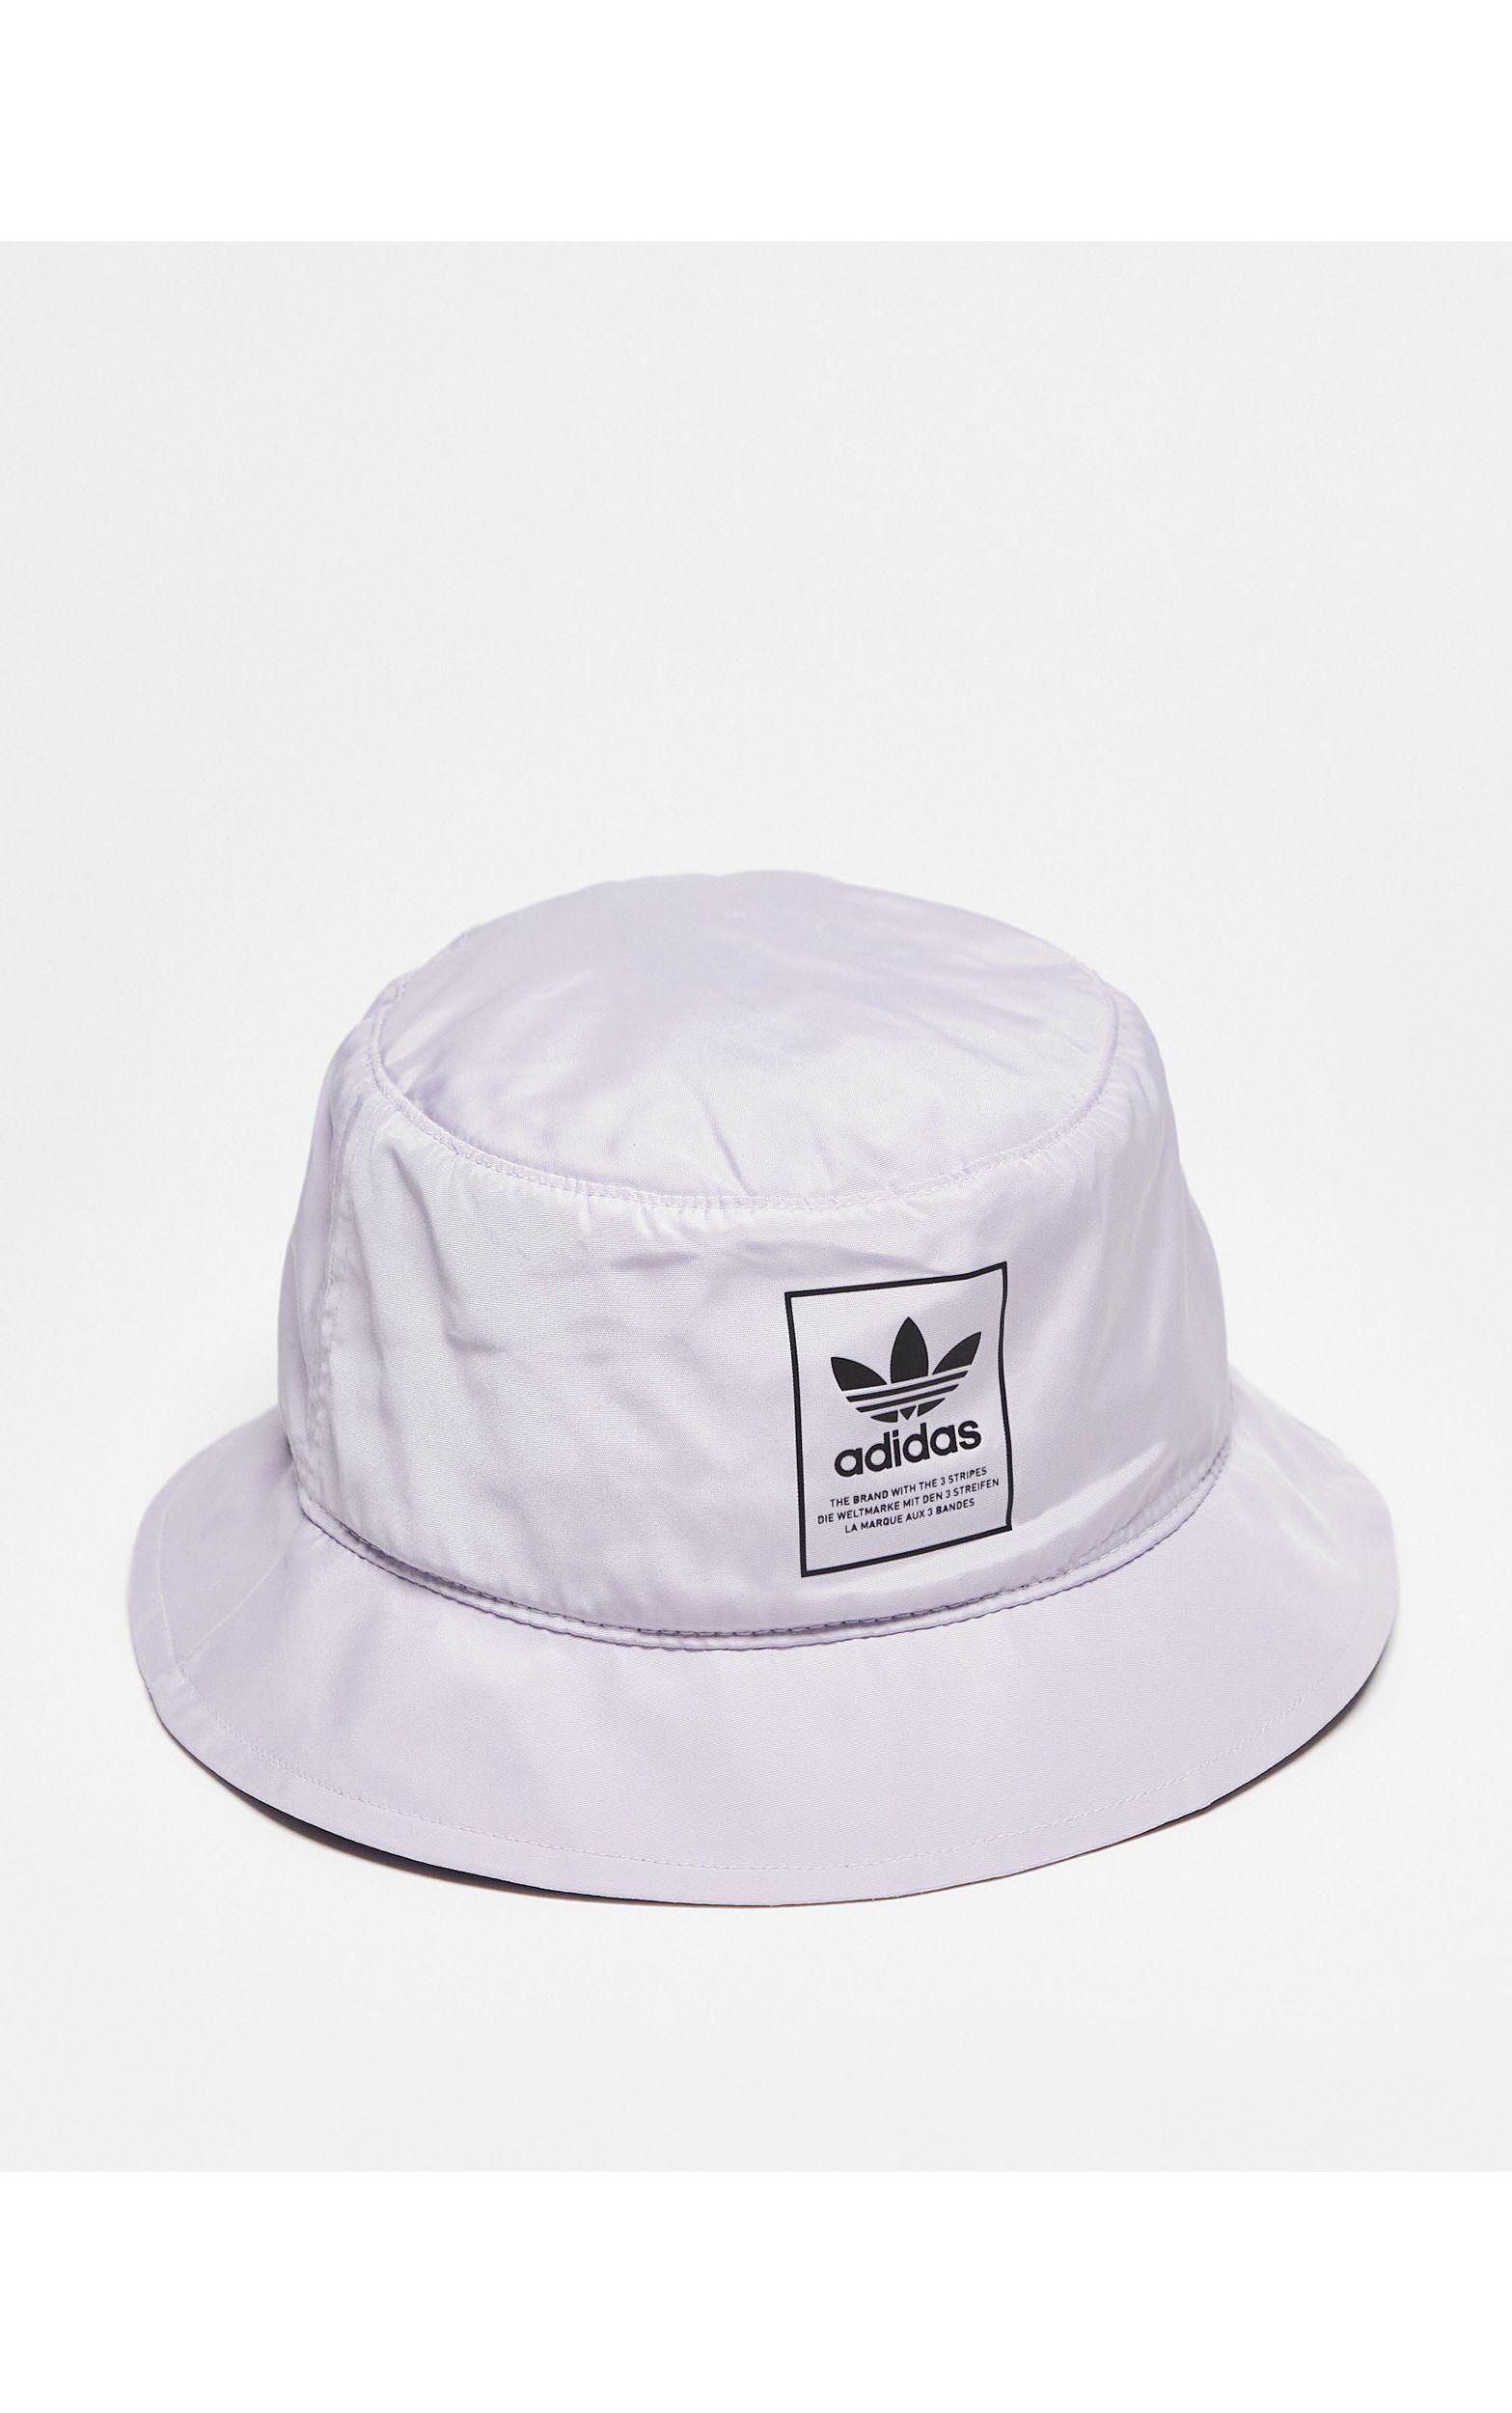 adidas Originals Packable Bucket Hat in White | Lyst